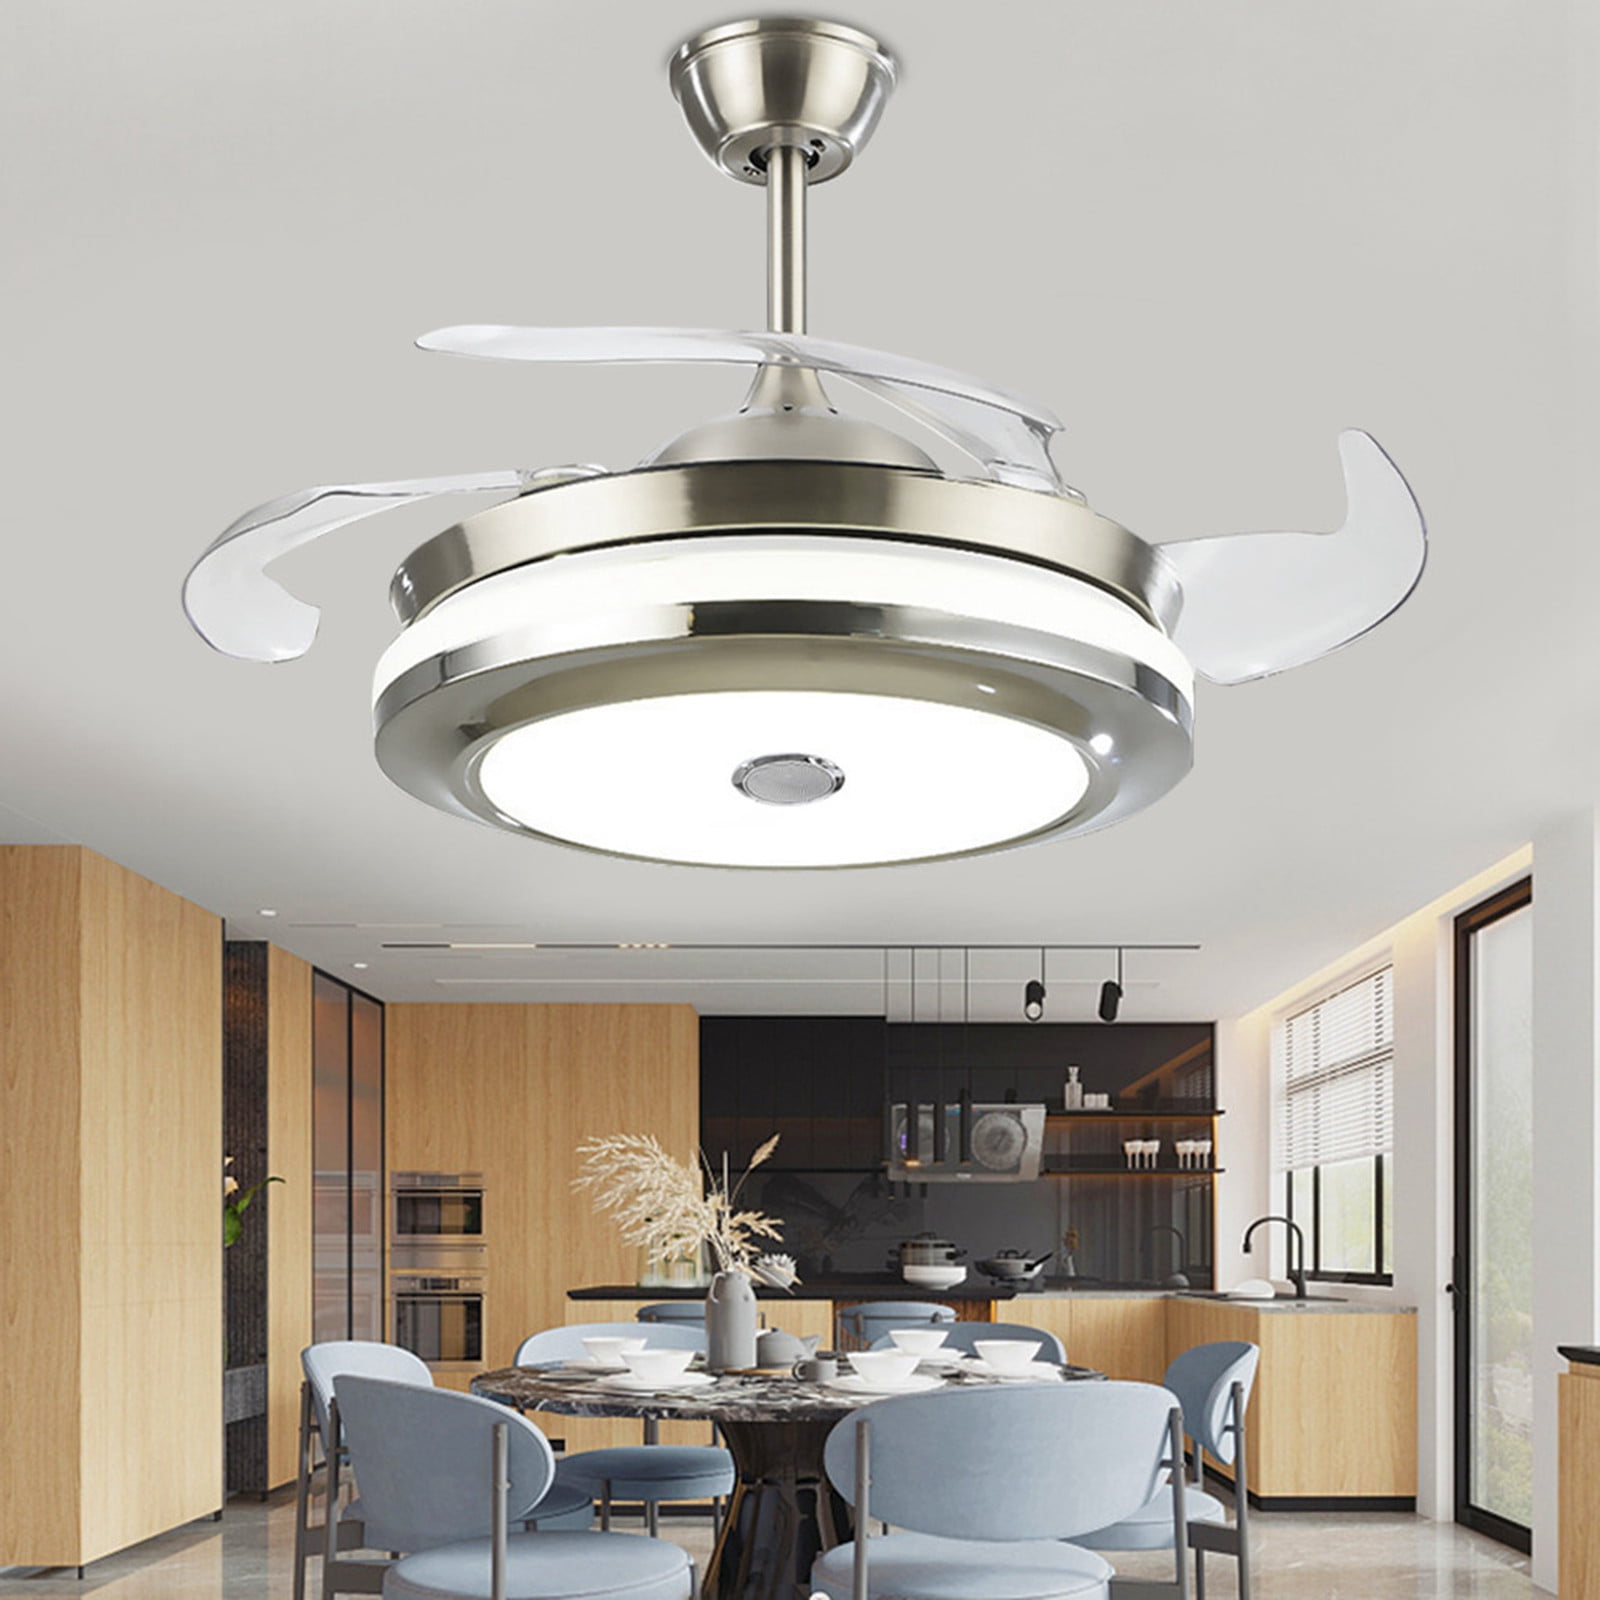 47" 12W LED Chandelier Ceiling Fan Light w/ Wooden Blades Remote Control 